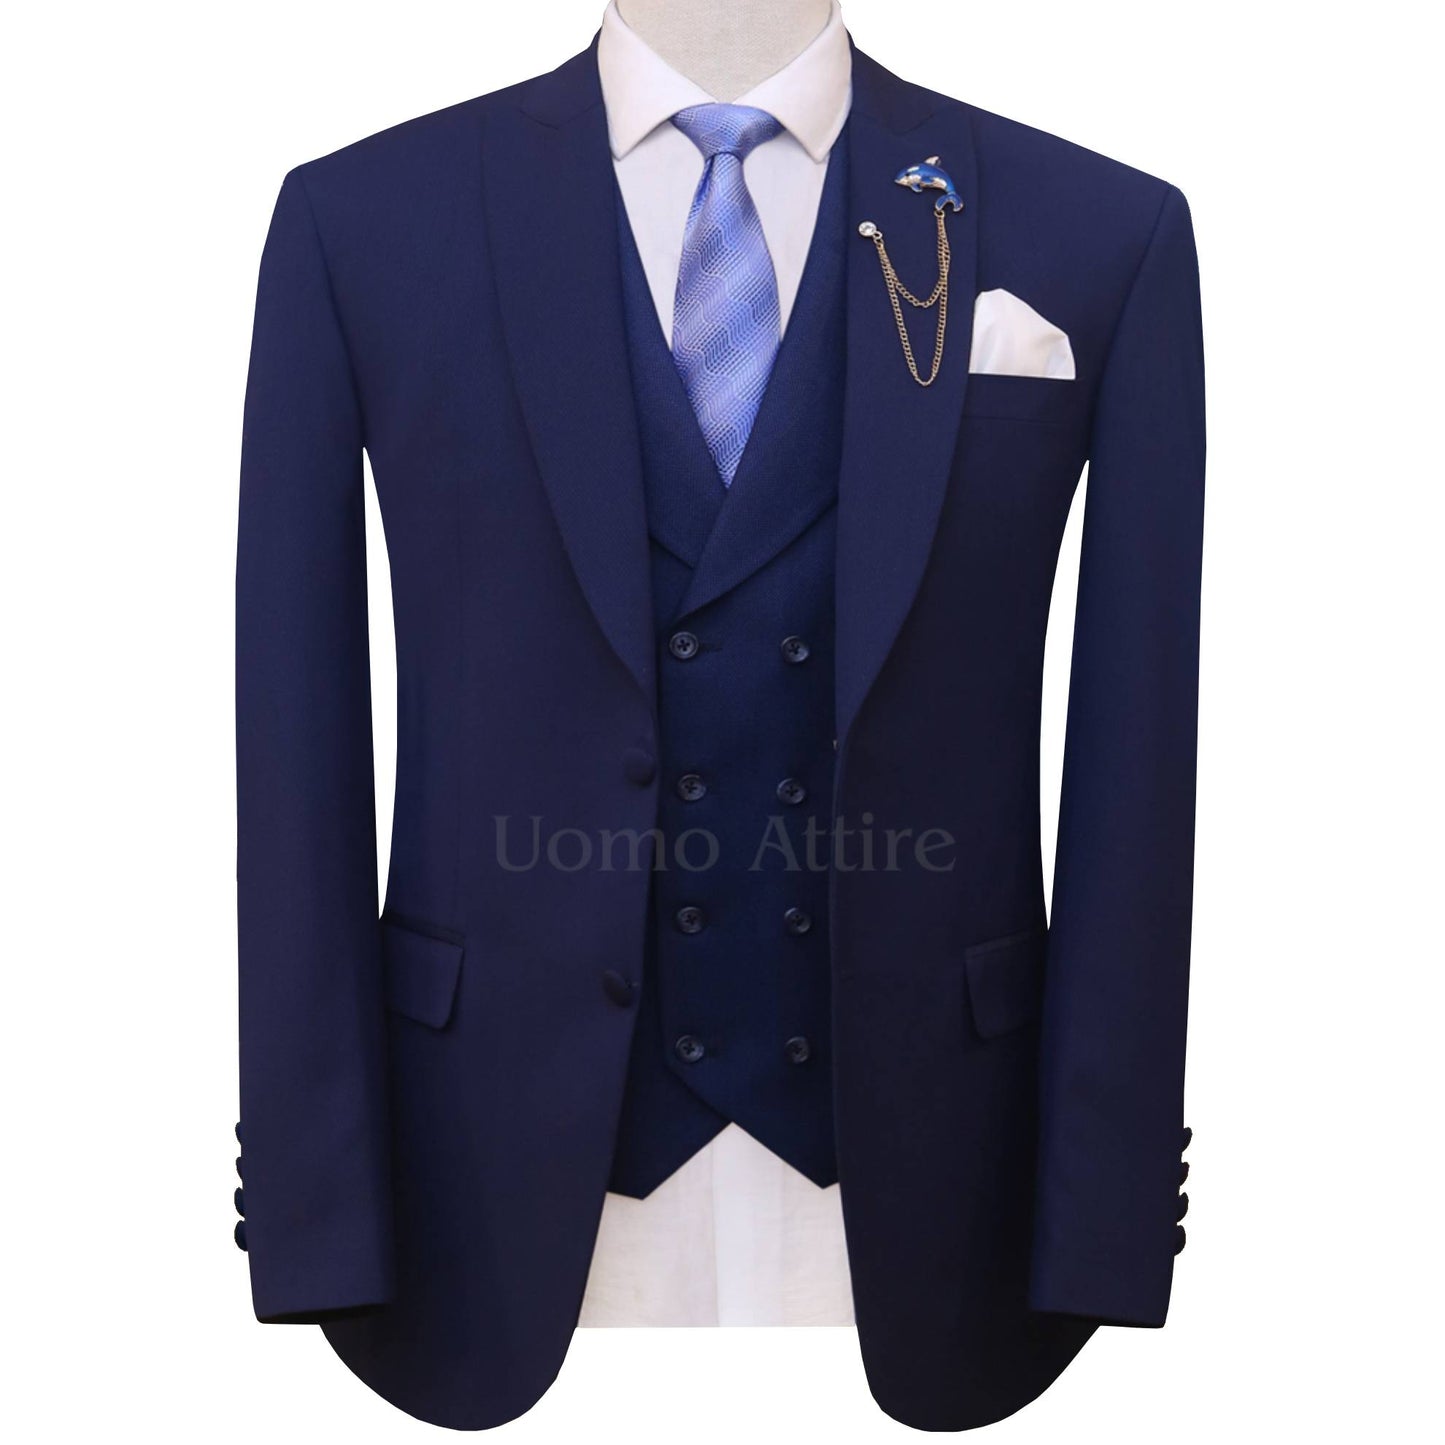 Custom-made textured light weight navy blue three piece suit